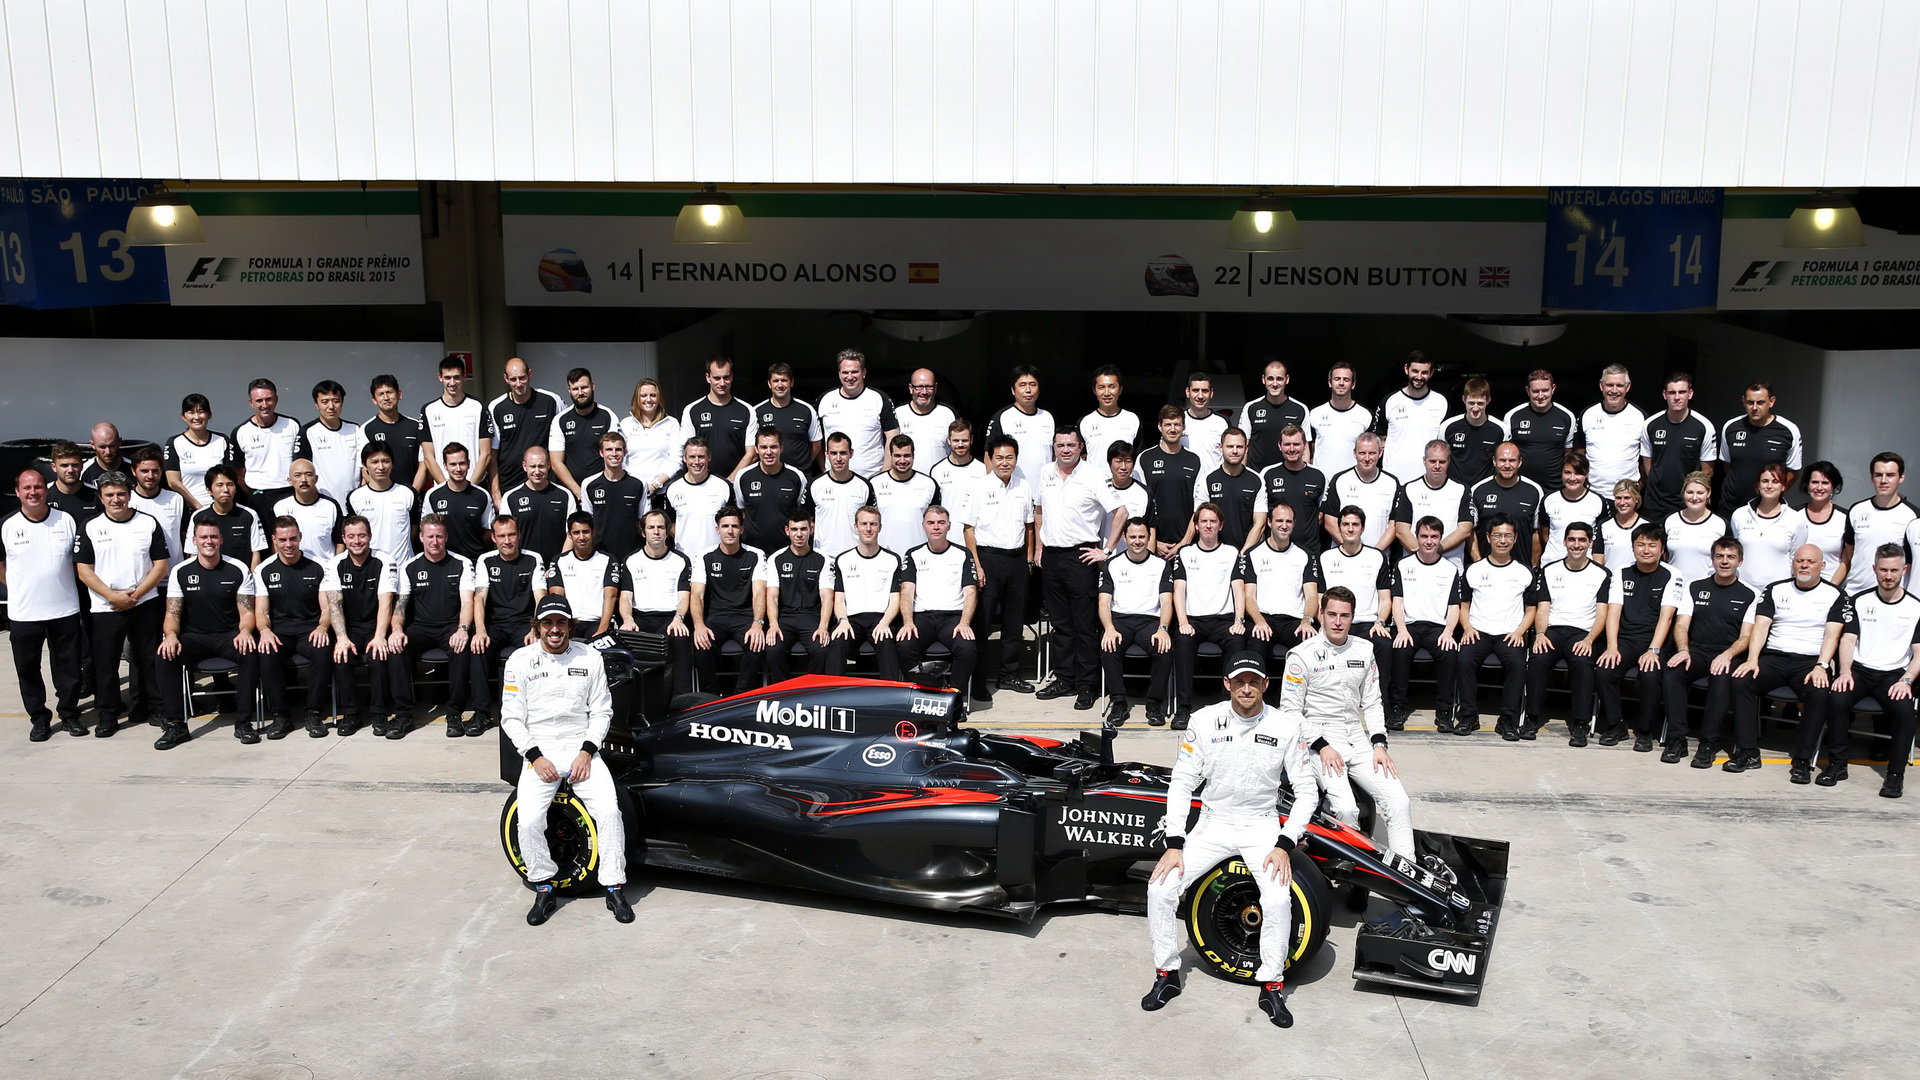 Letos neměl McLaren co slavit, ale i tak tu máme týmové foto